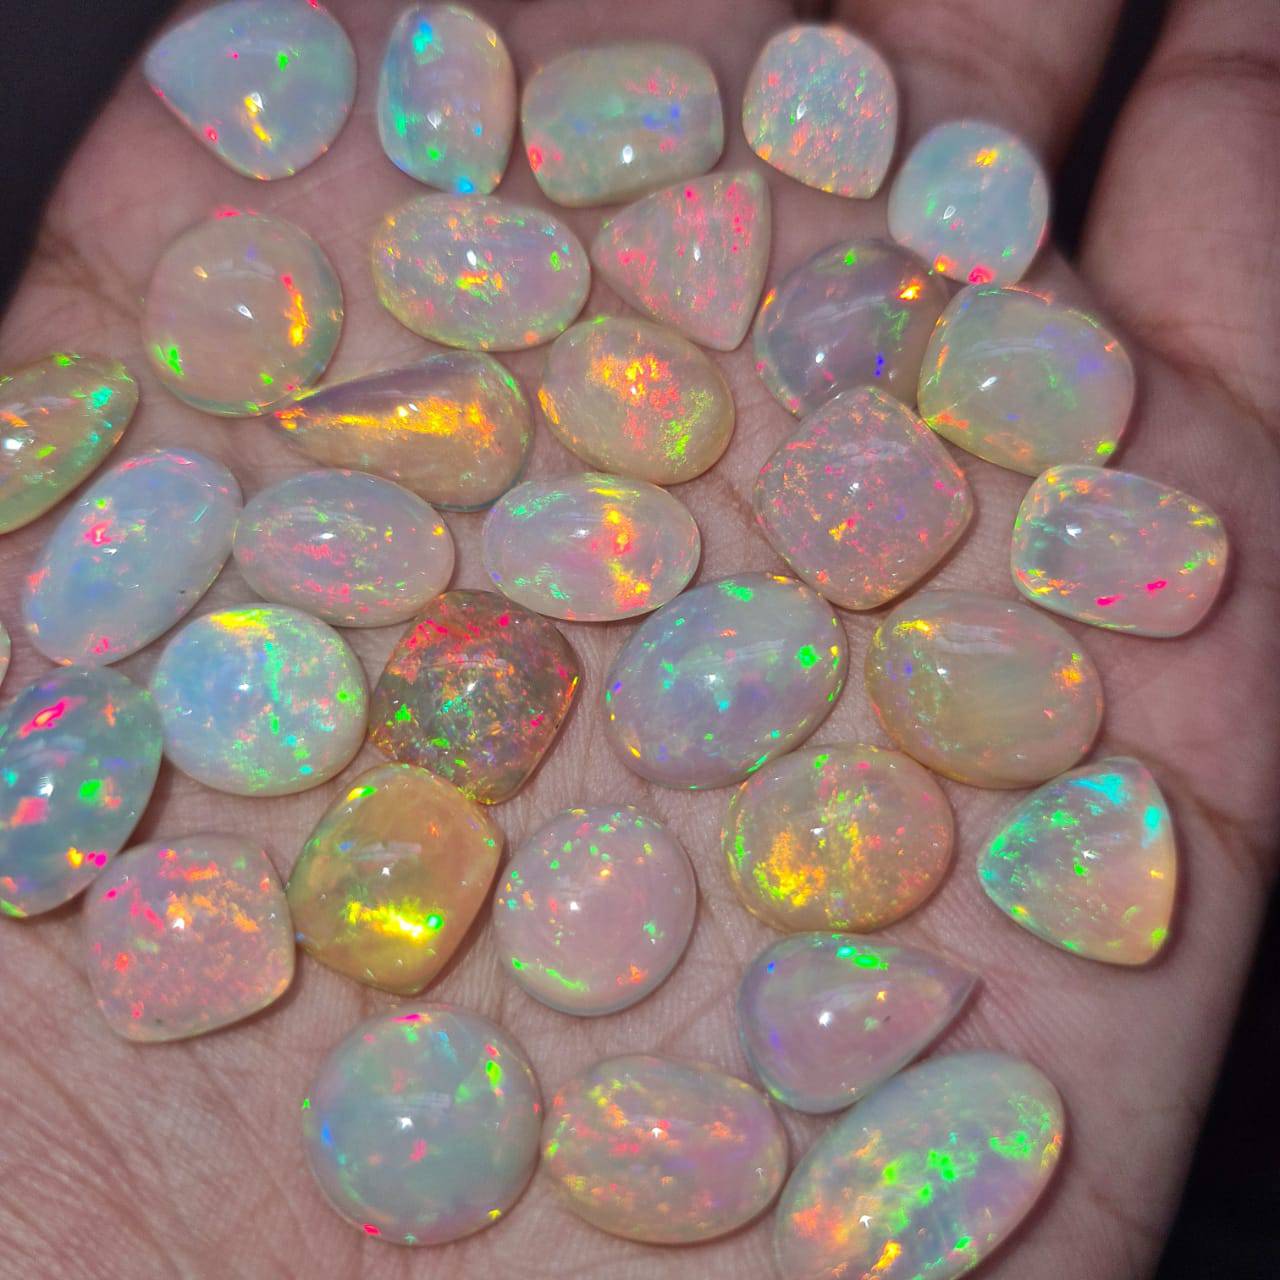 Offer🔥 Natural Opal Big size Cabochons | 9-12mm | 3-4 Ct - The LabradoriteKing